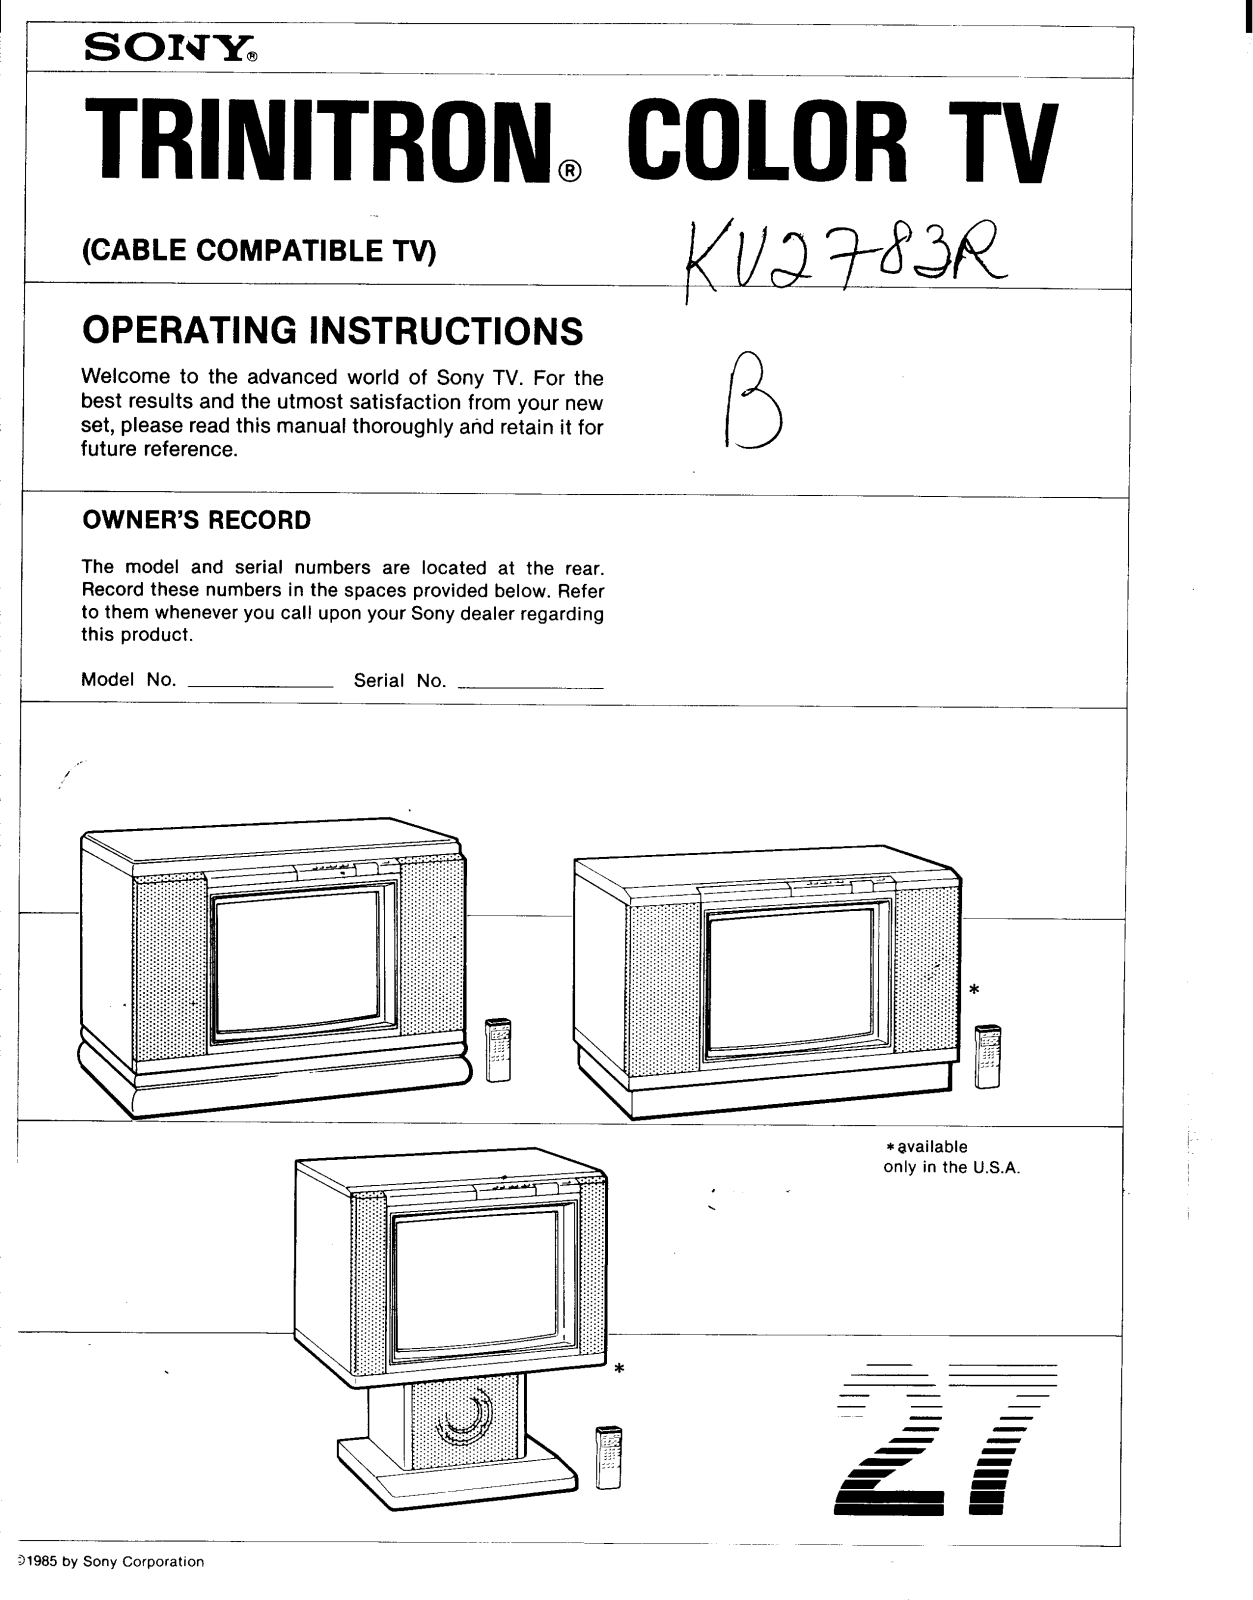 Sony KV-2783R Operating Manual